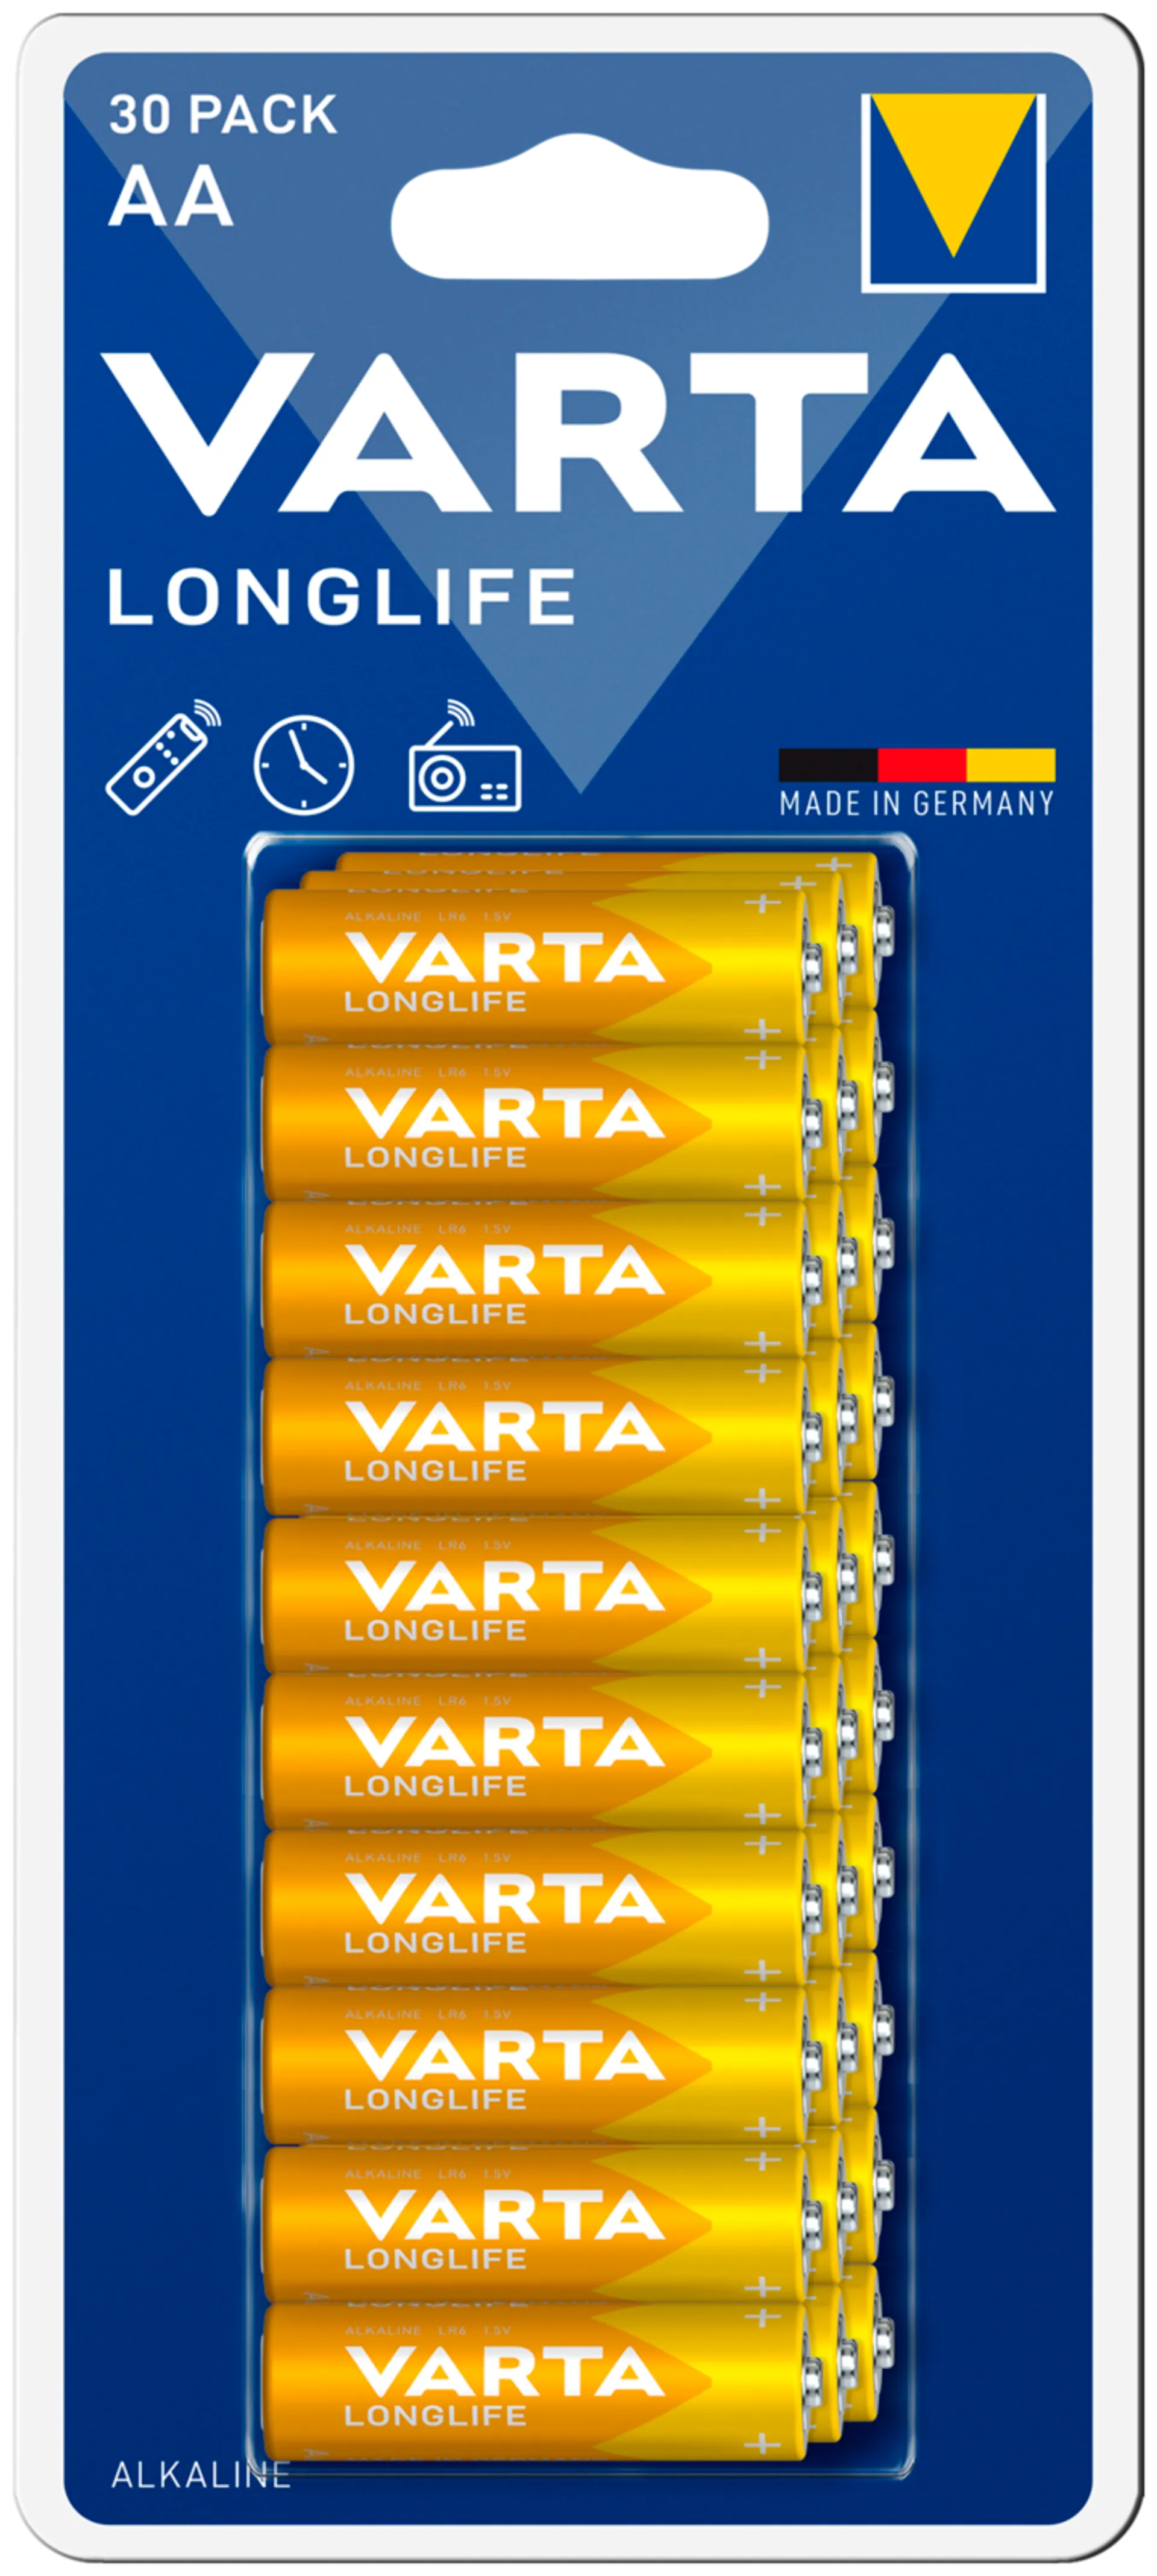 VARTA Longlife AA 30 pack - 1